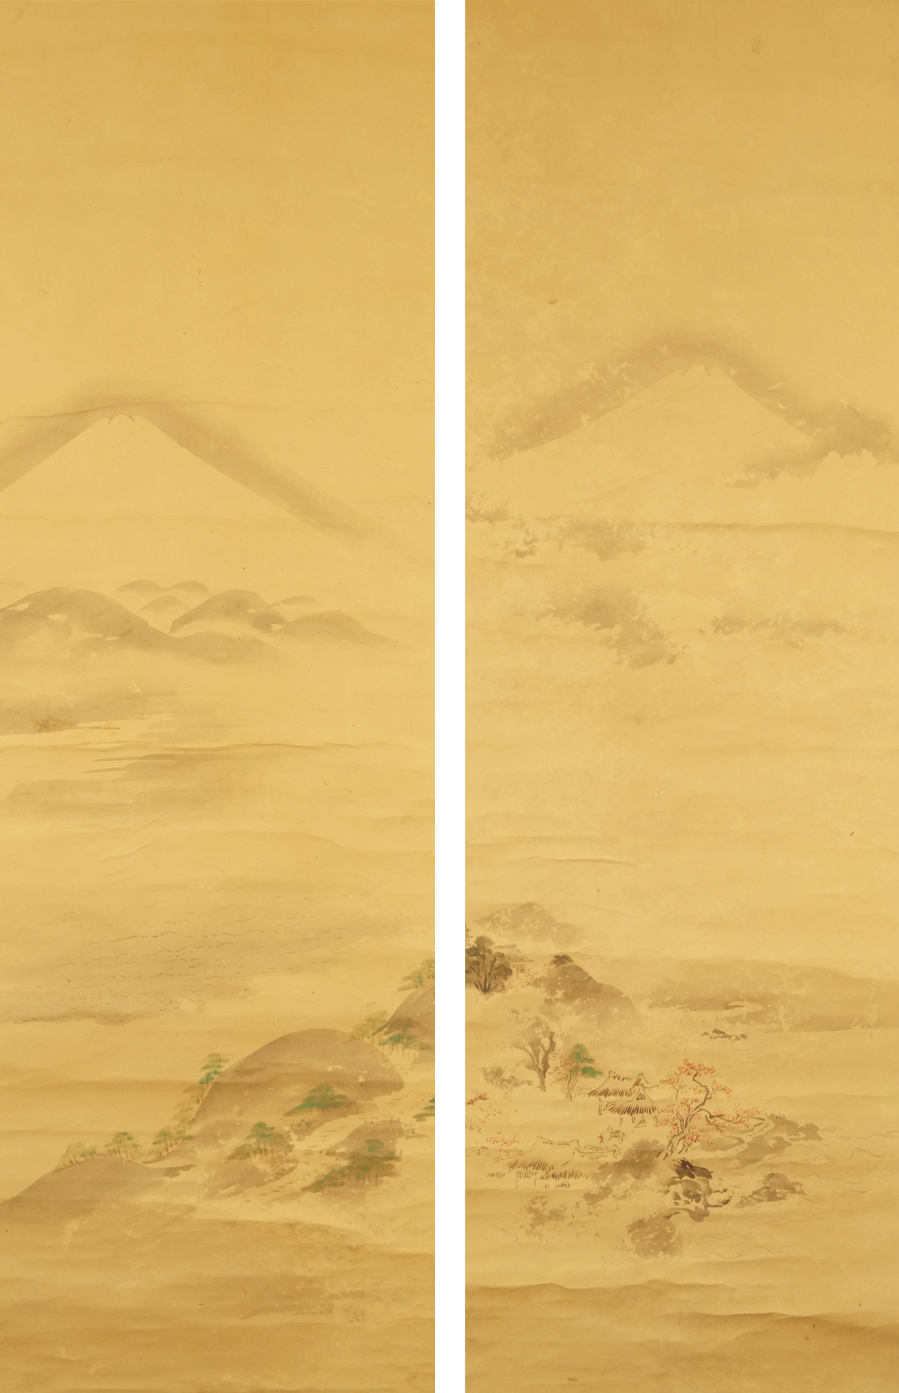 Fuji-san im Sommer und Herbst - 2er Set japanische Rollgemälde (Kakejiku, Kakemono)